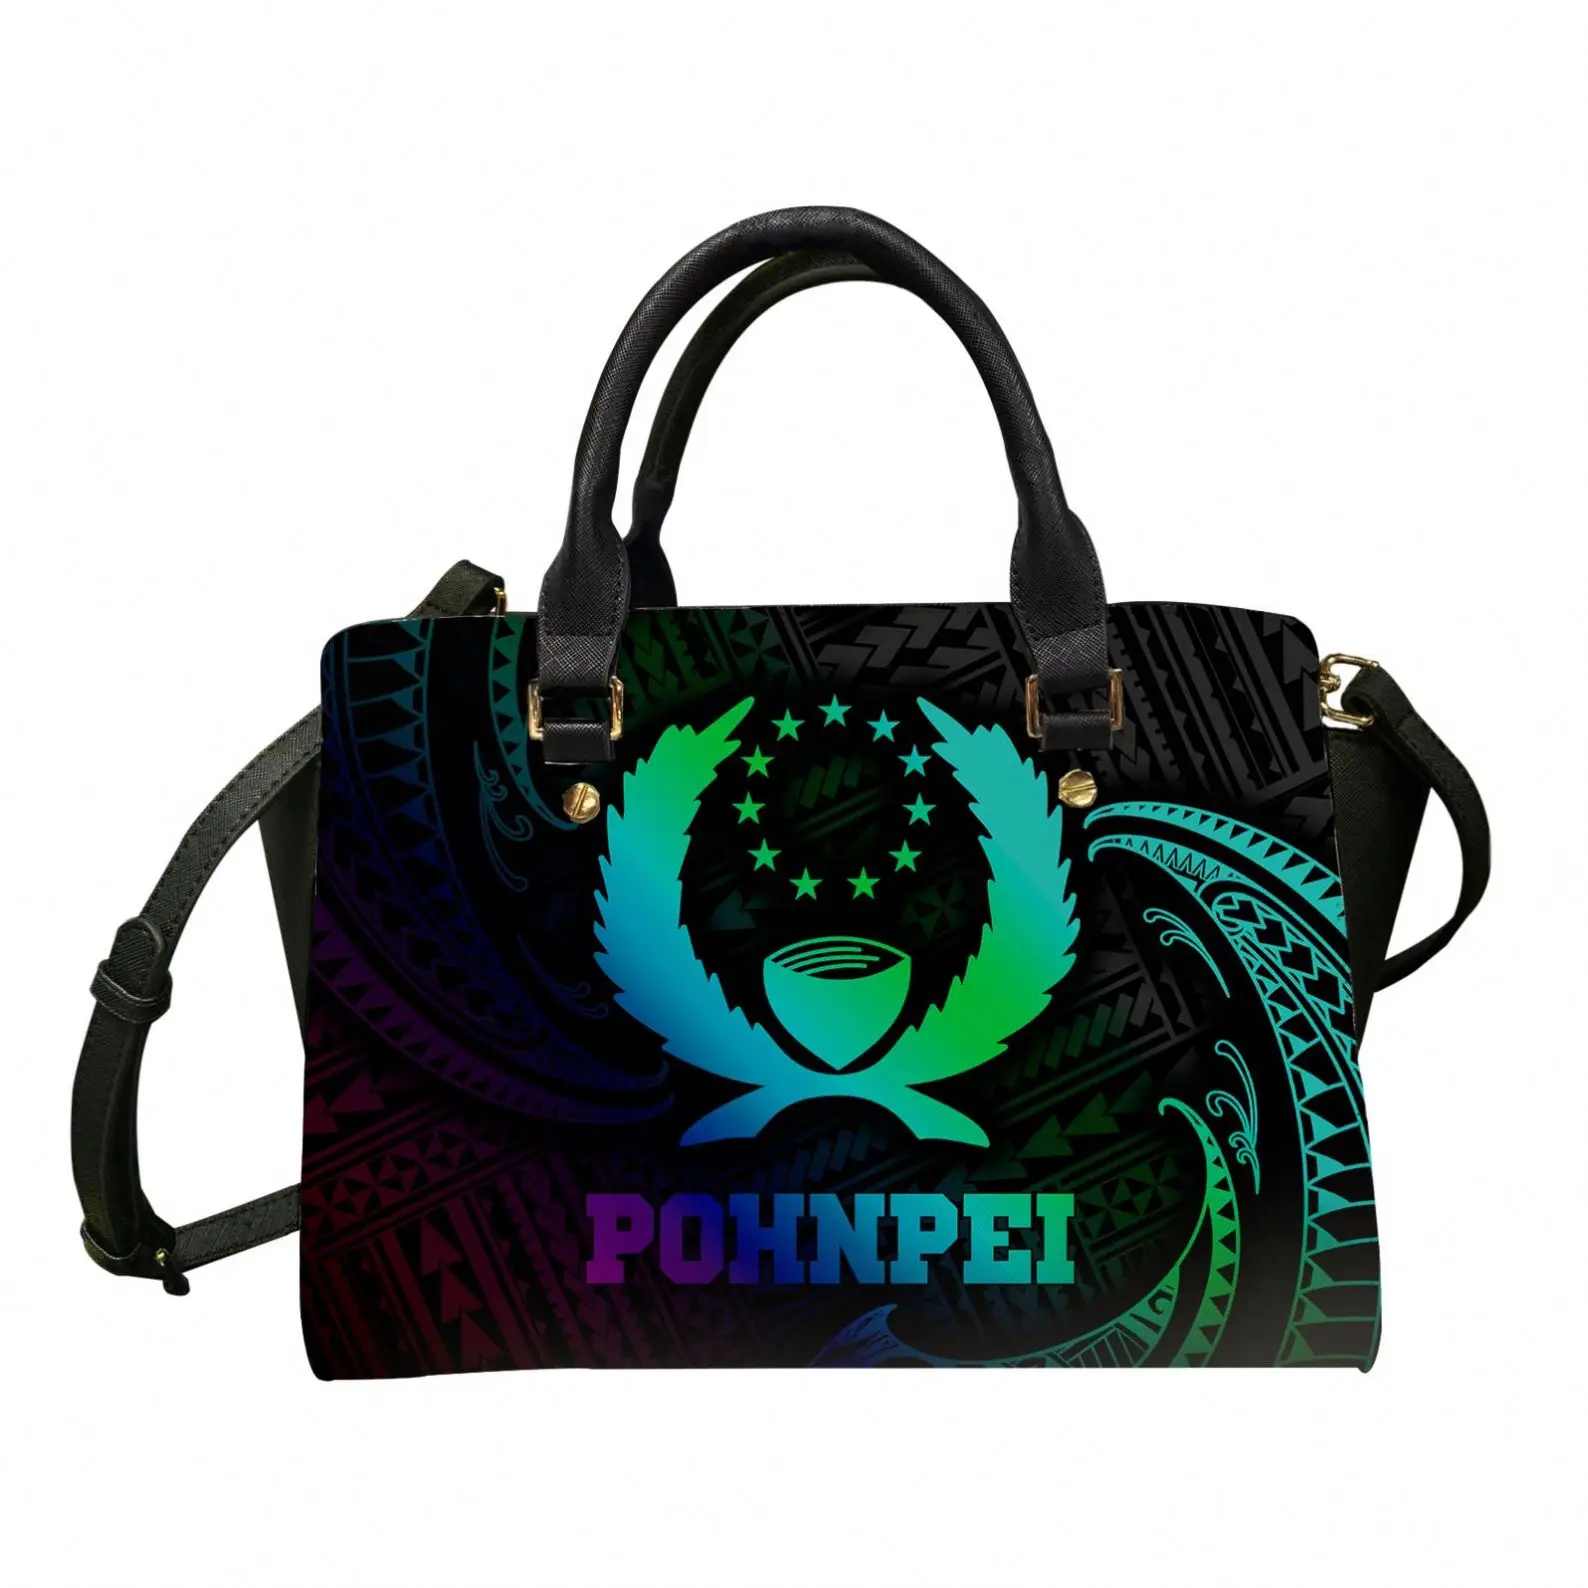 

Pohnpei Custom Handbags for Women Luxury Vintage Tribal Turquoise PU Leather Handbag Designers Big Hobo Purses Shoulder Bags, Accept custom made